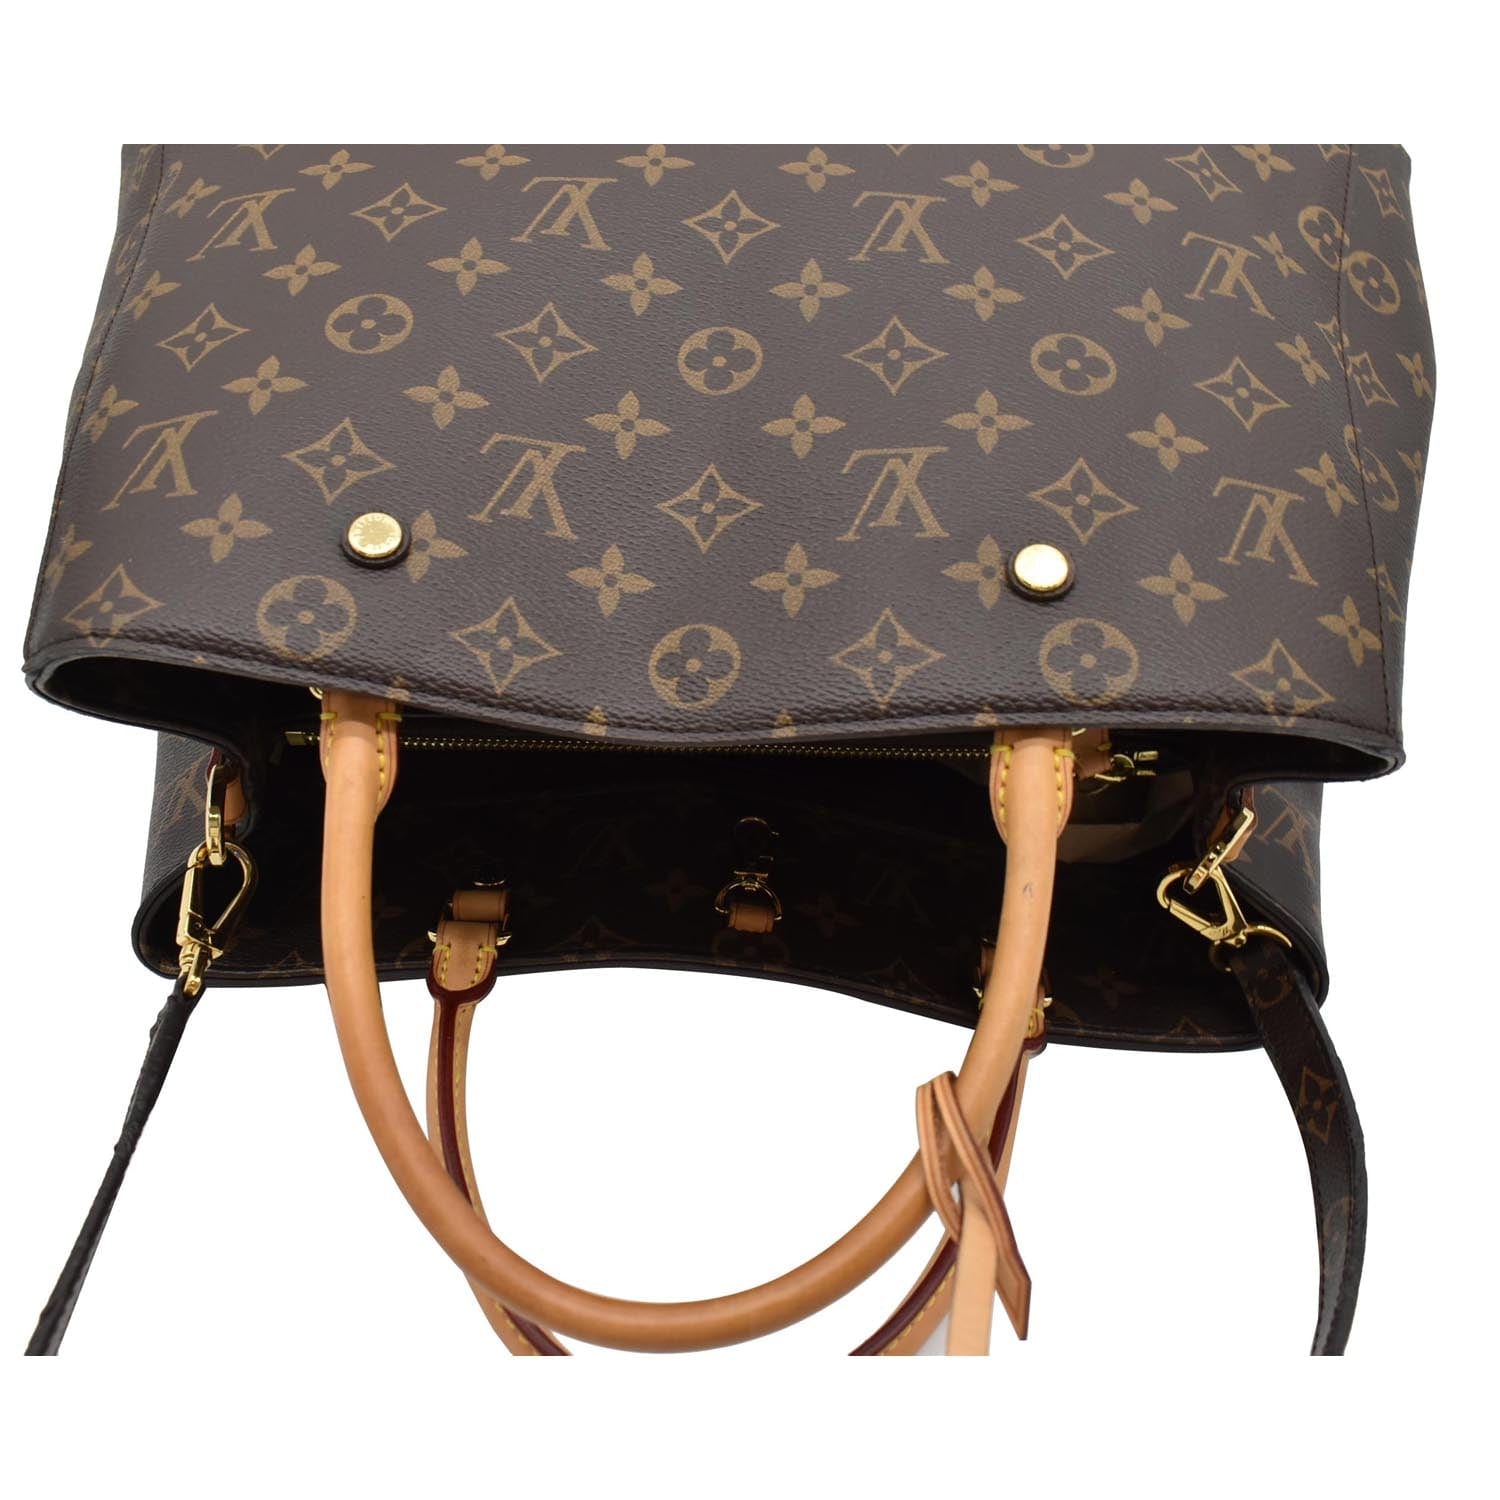 Louis Vuitton, Bags, Authentic Lv Montaigne Gm Mng Purse For Sale